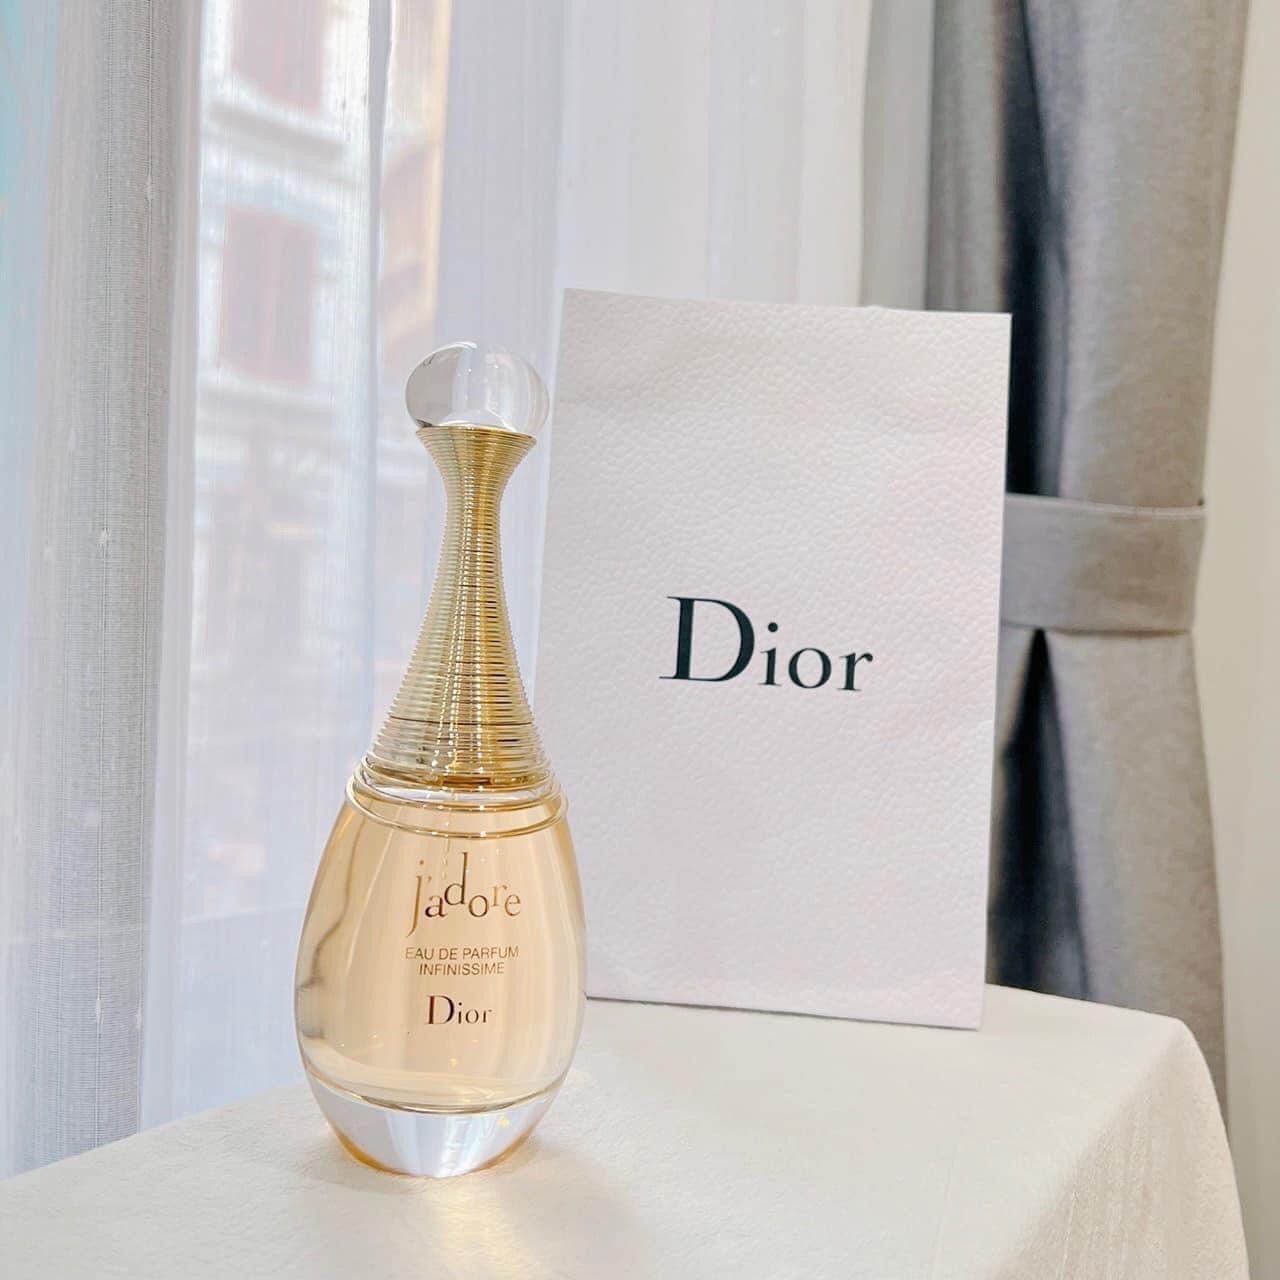 Nước Hoa Jadore Dior Eau De Parfum  30ml  Siêu thị Eva